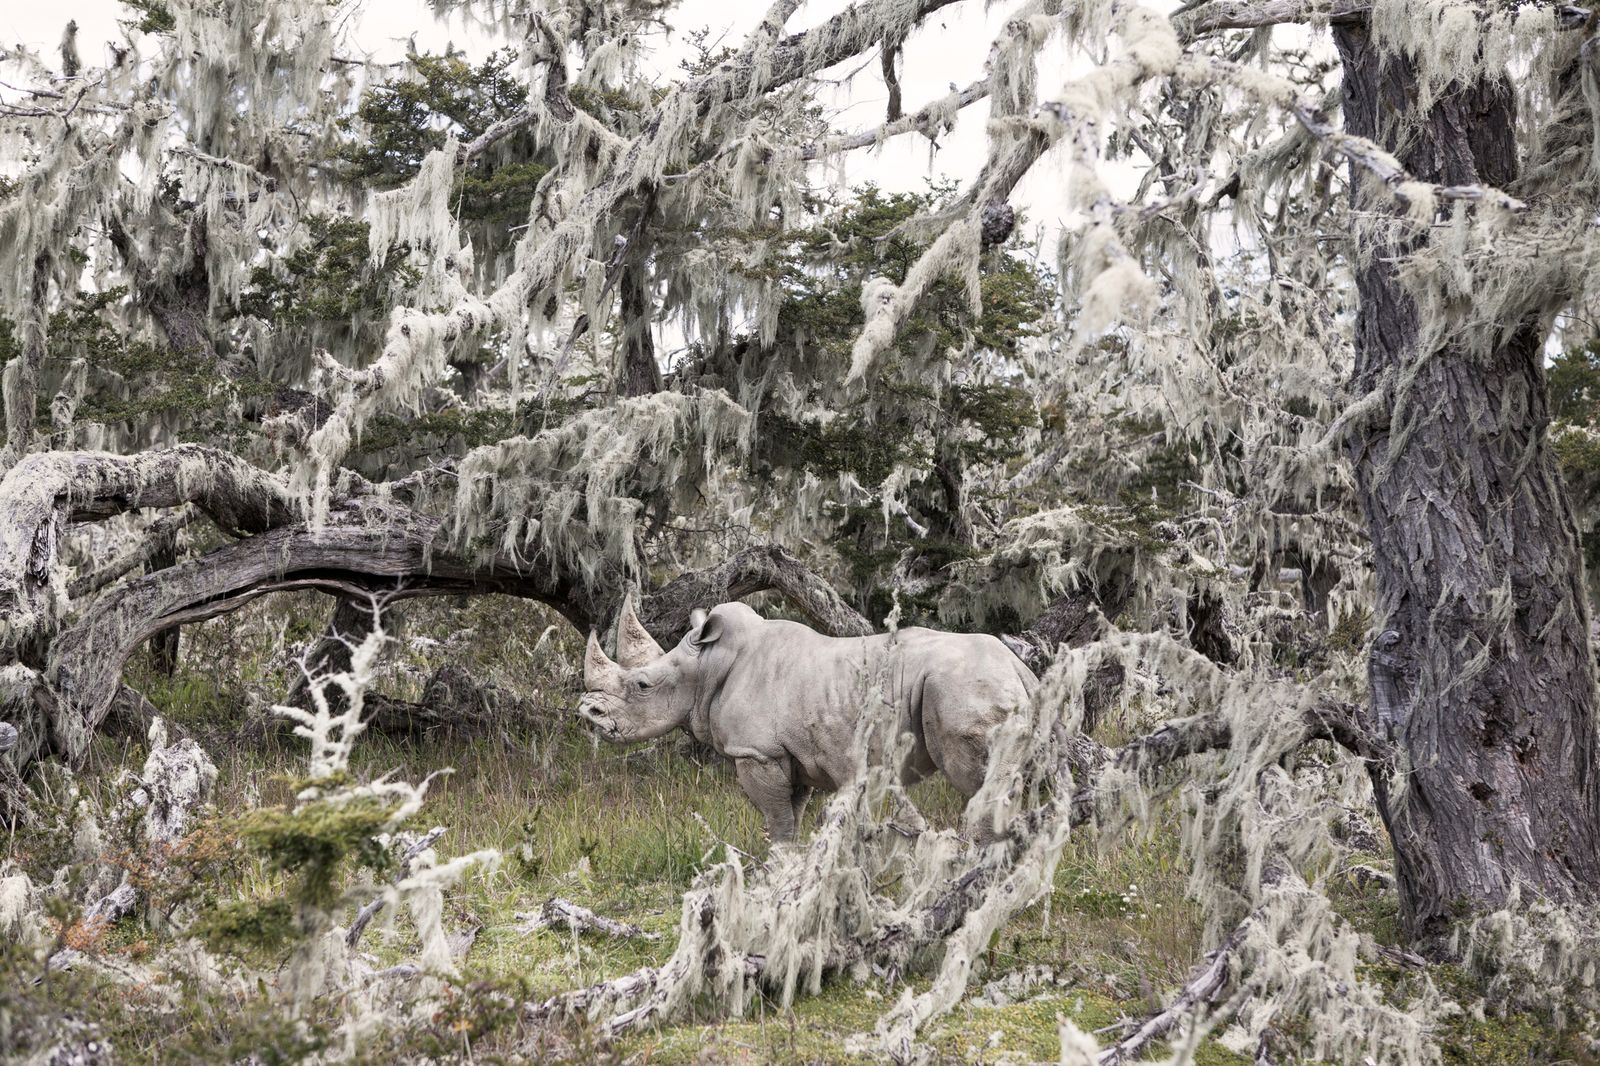 © Sofia Lopez Mañan - A Digital illustration of a rhinoceros in the Patagonian forest of Tierra del Fuego.